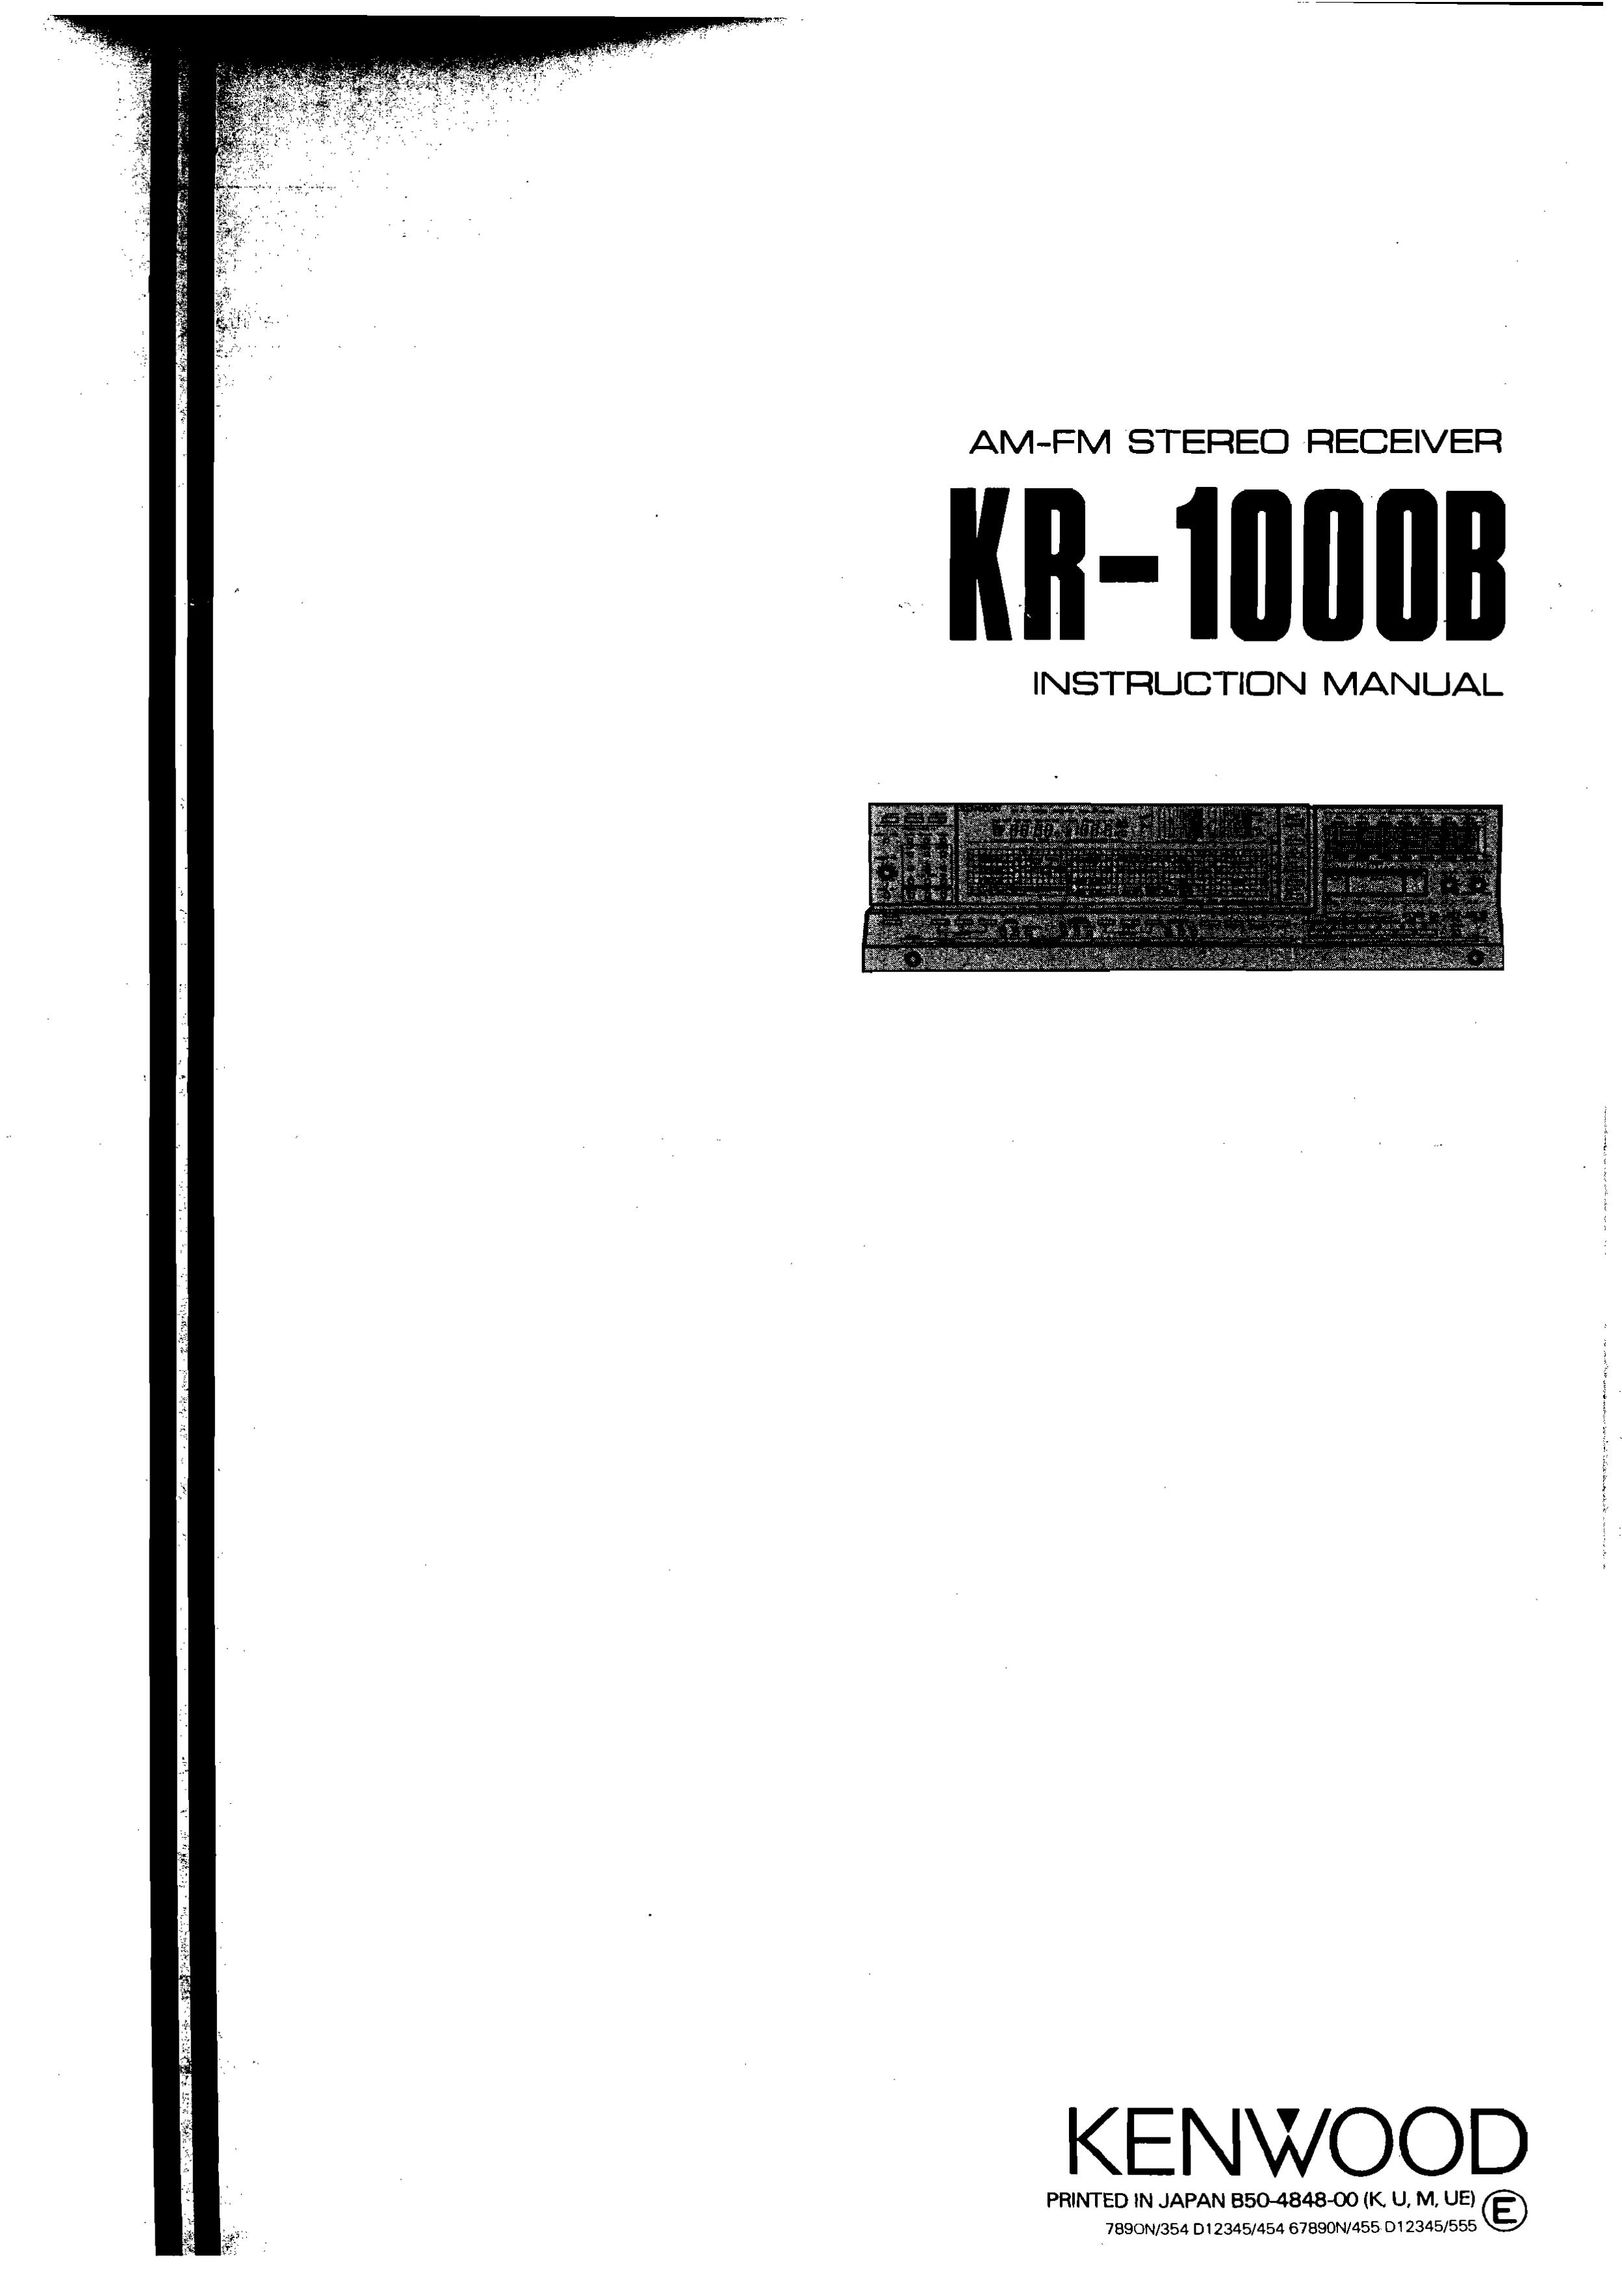 Kenwood KR-1000B Stereo Receiver User Manual